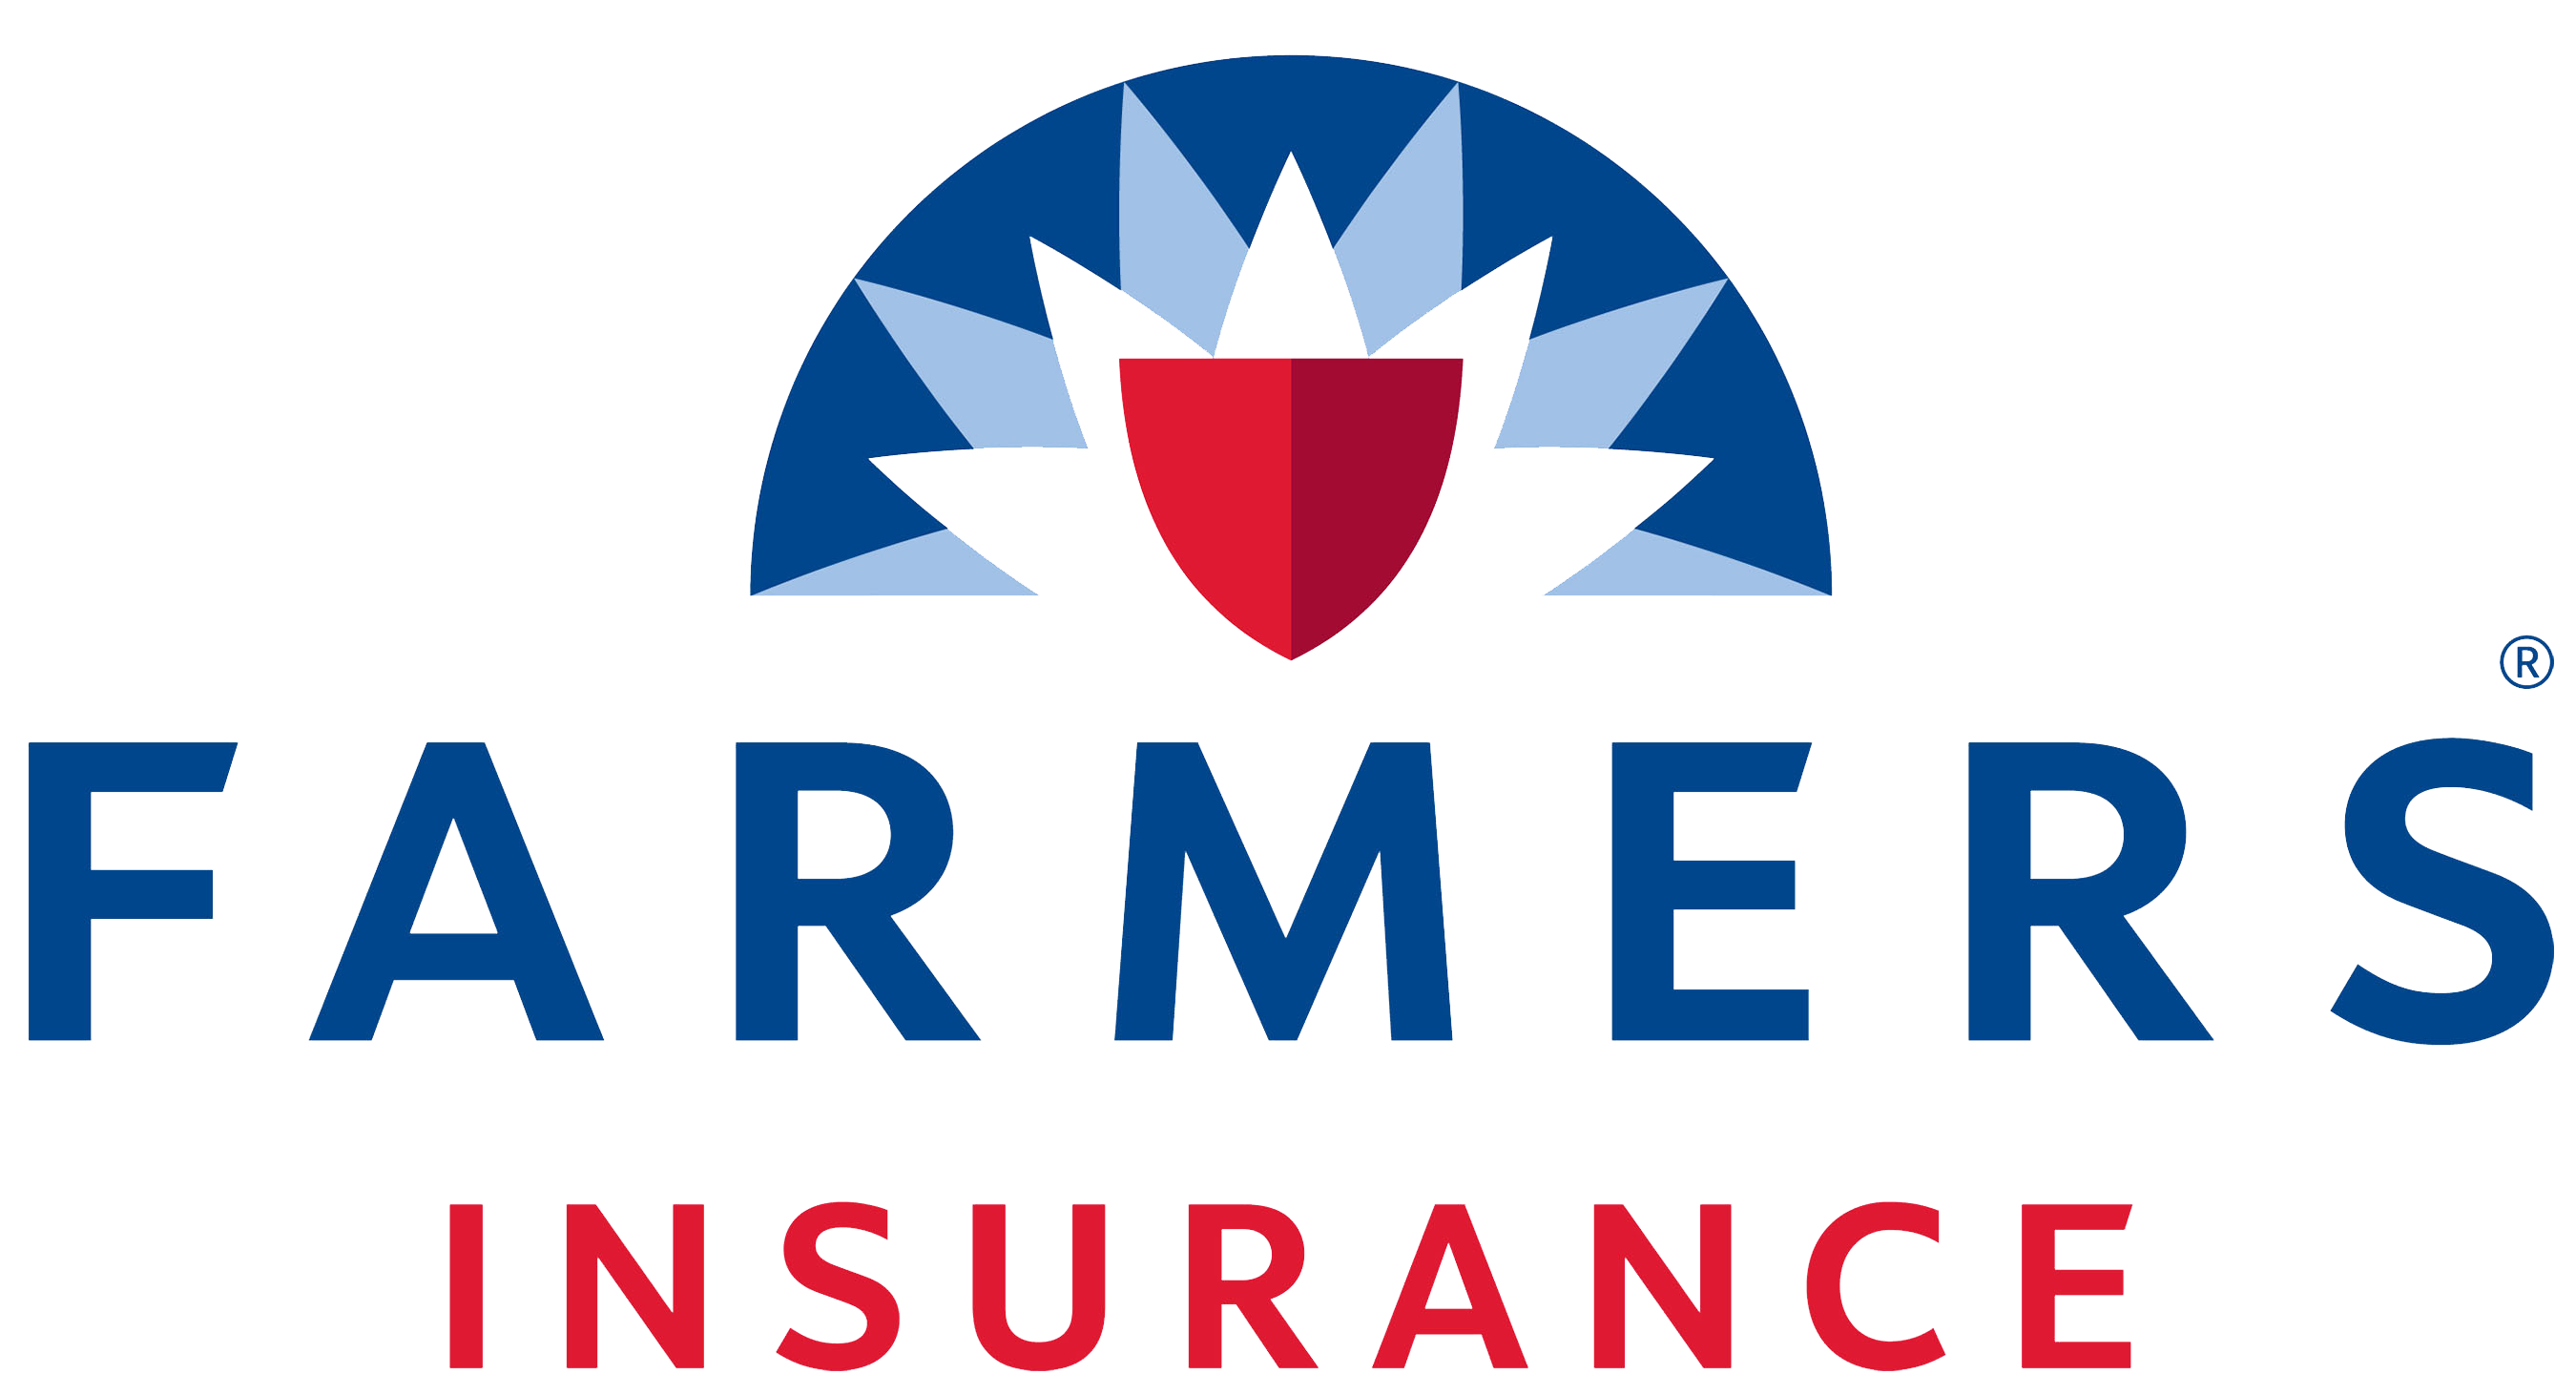 Statistics farmers insurance logo